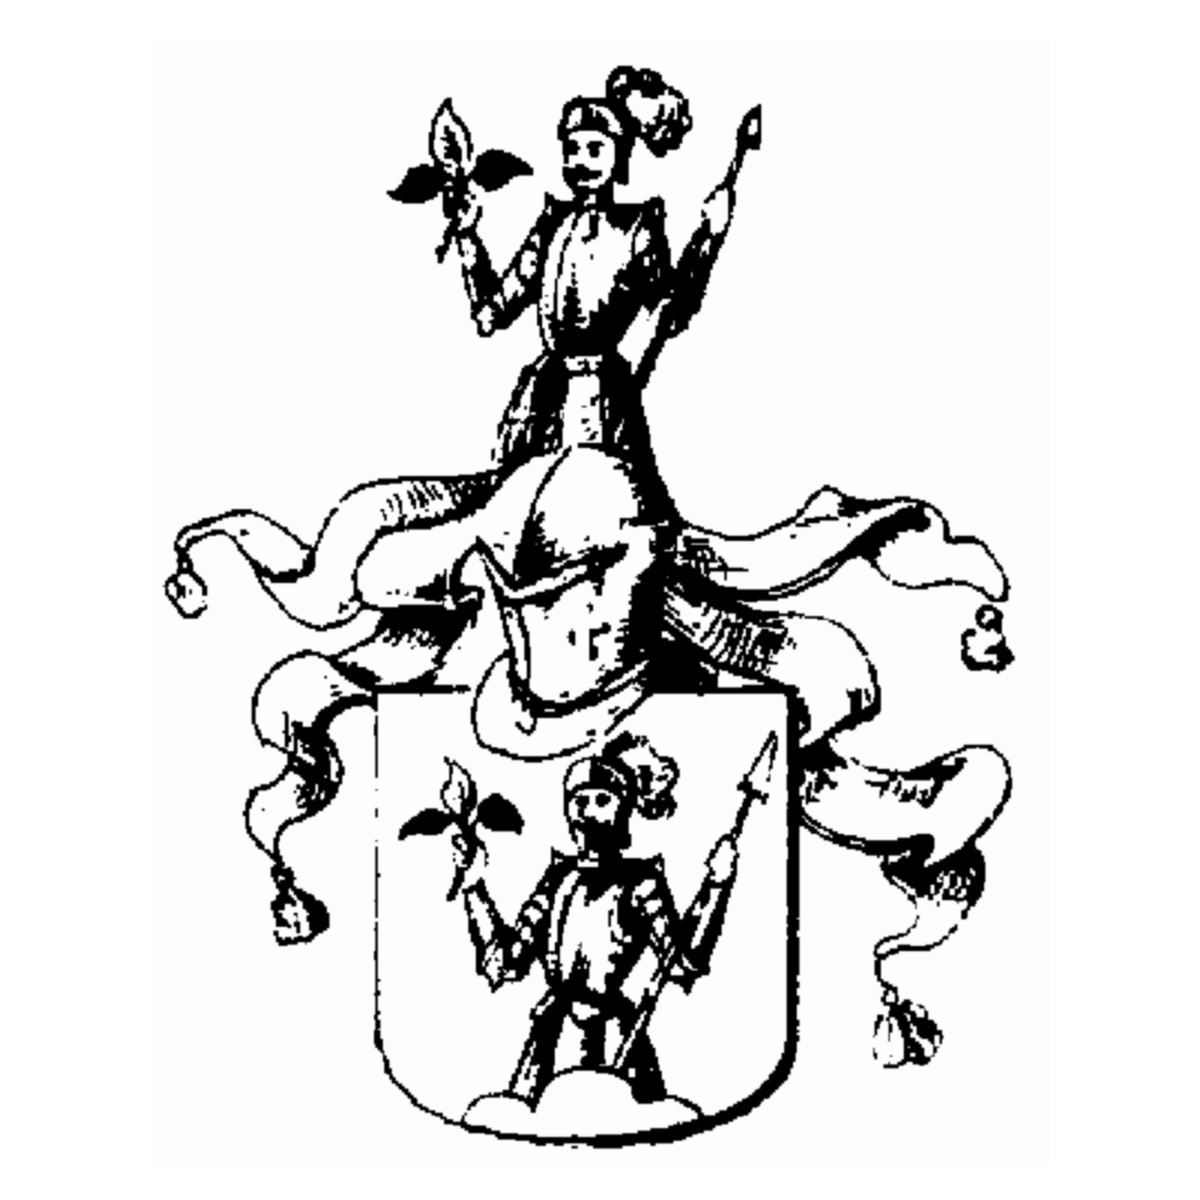 Coat of arms of family Mützel